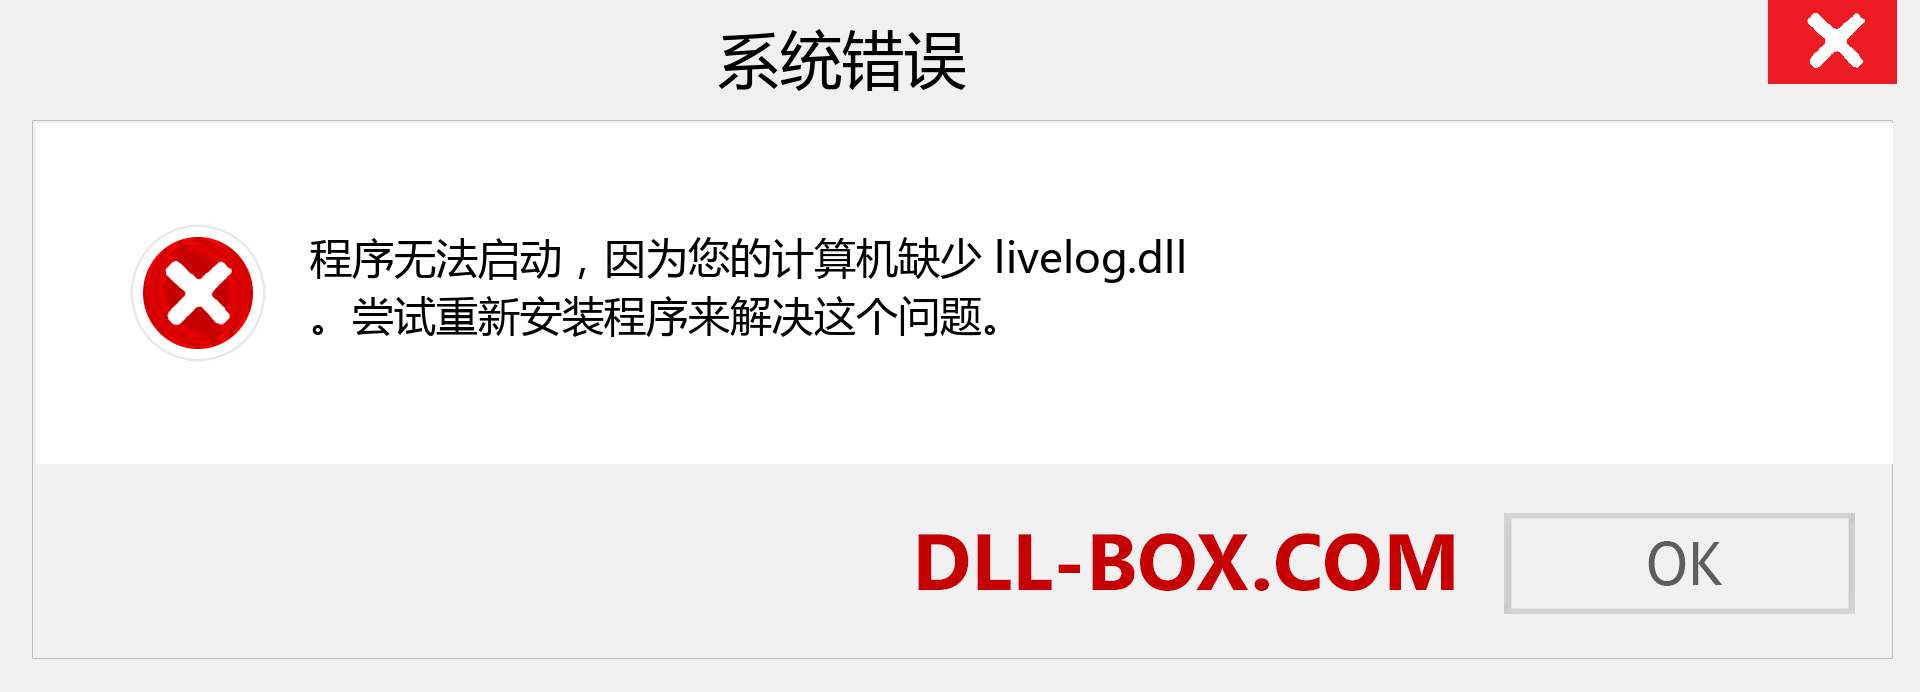 livelog.dll 文件丢失？。 适用于 Windows 7、8、10 的下载 - 修复 Windows、照片、图像上的 livelog dll 丢失错误